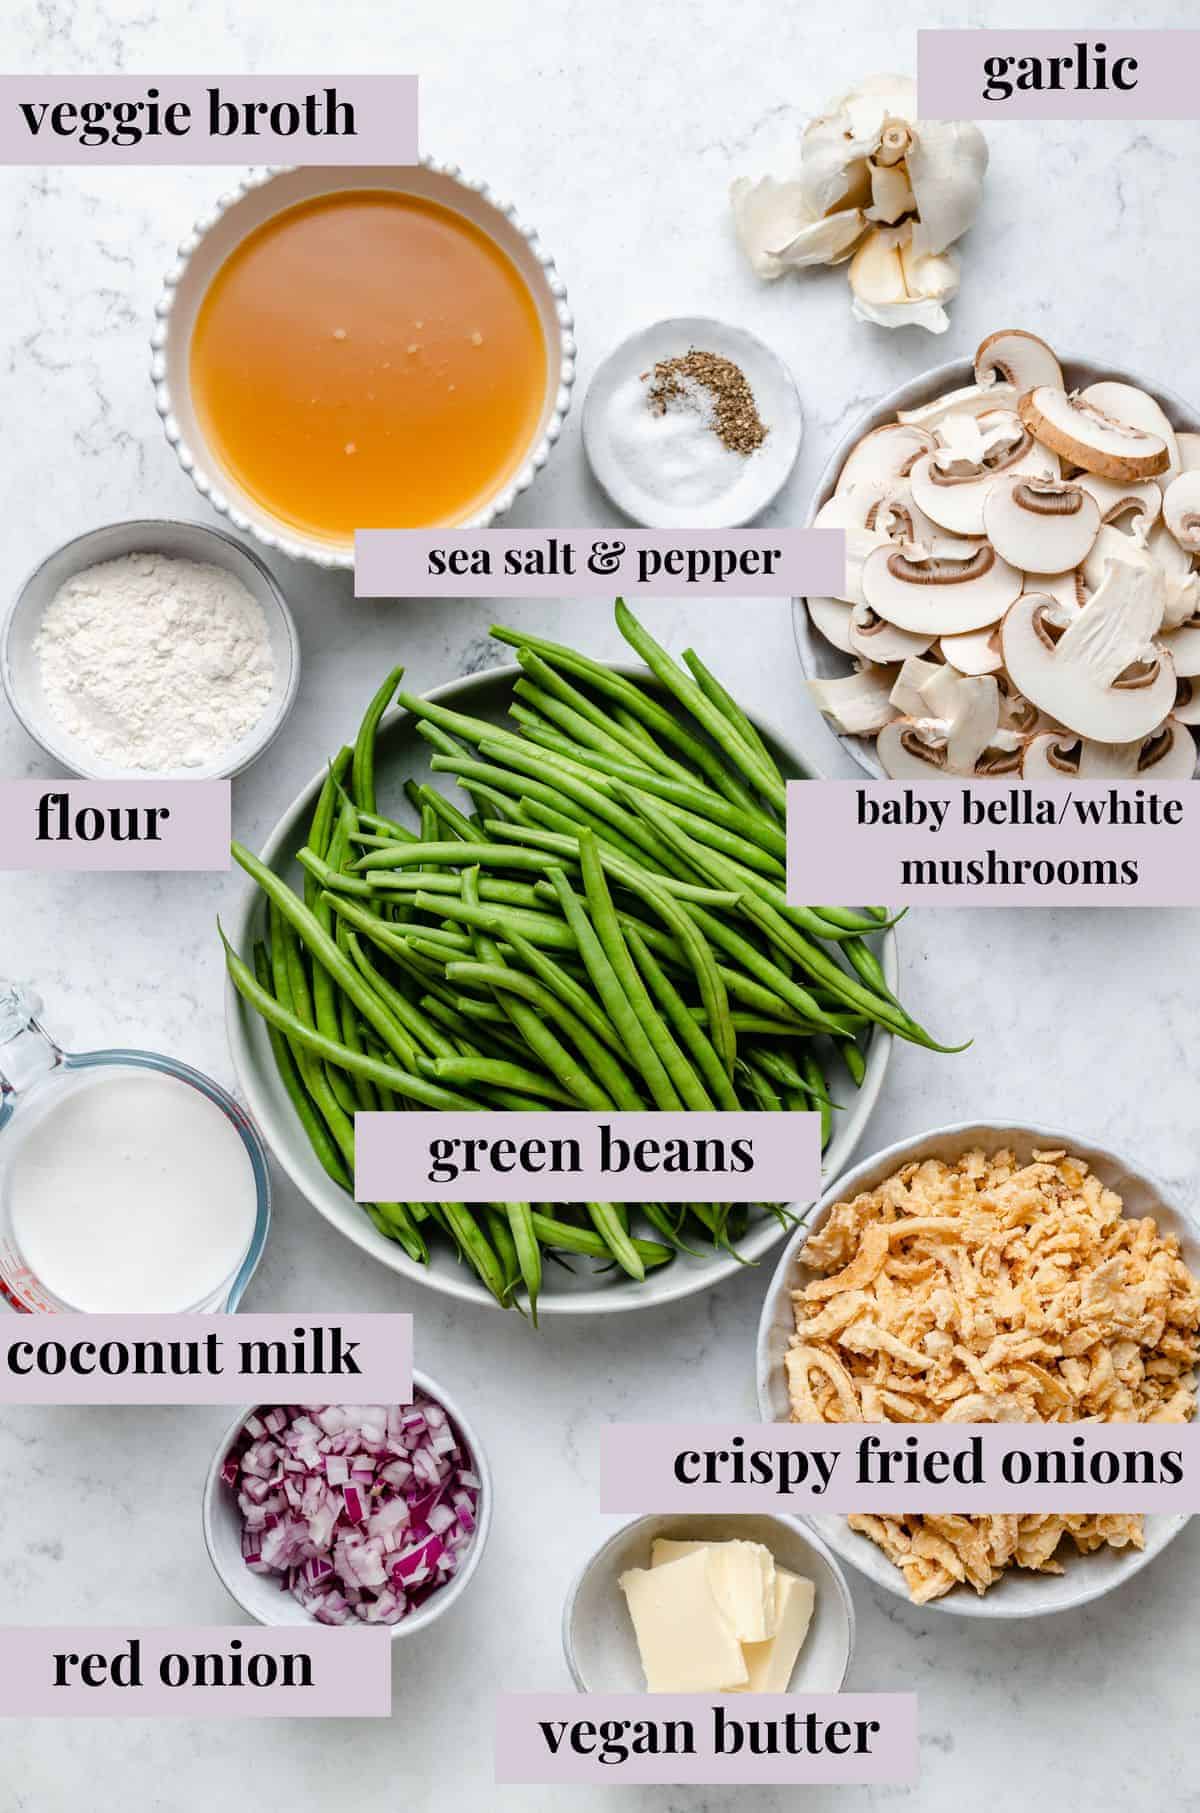 Overhead view of vegan green bean casserole ingredients